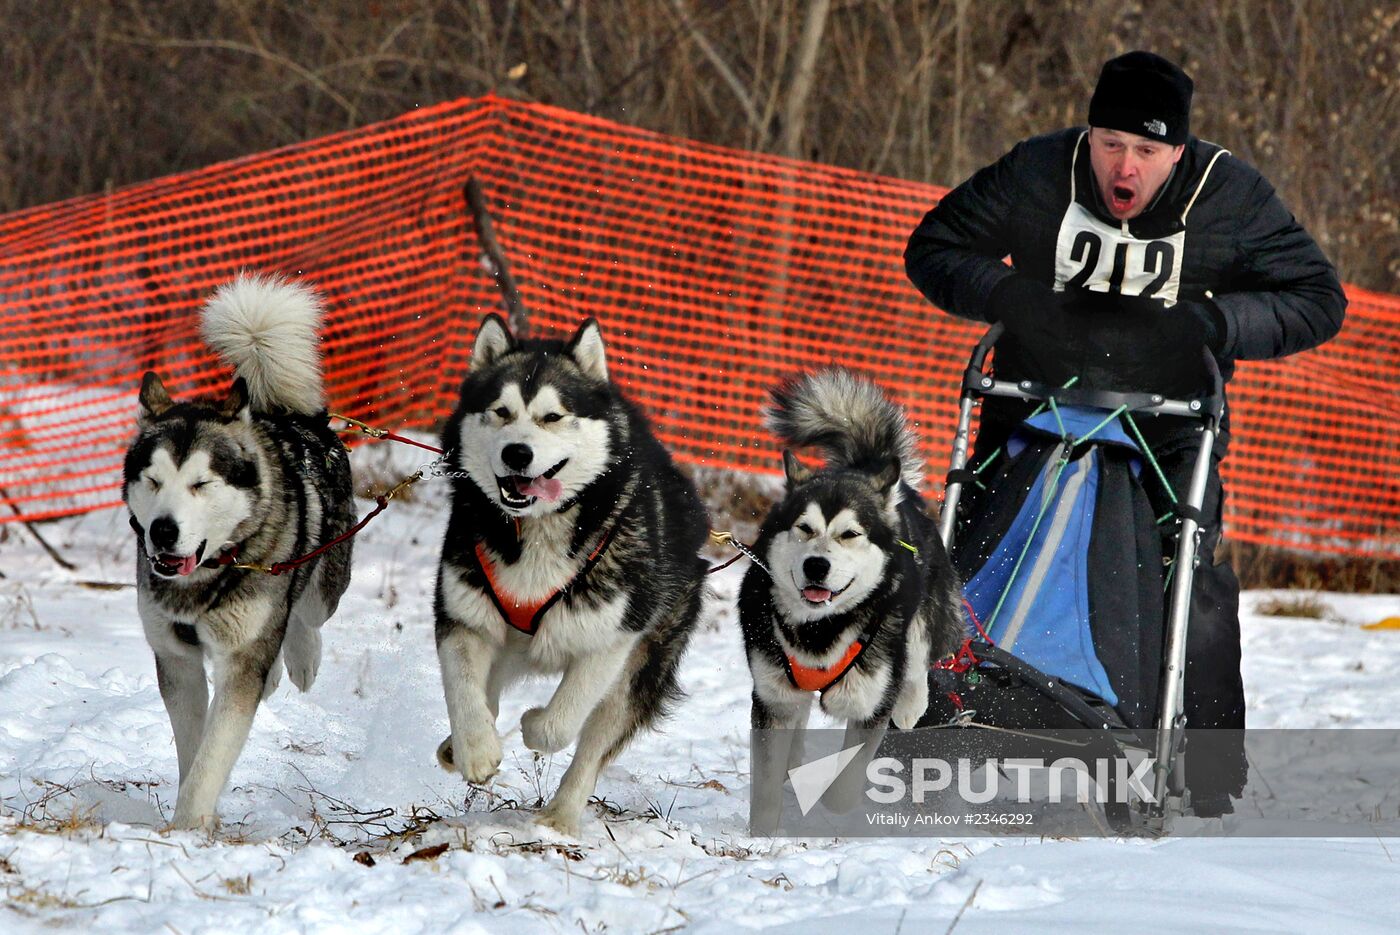 Competitions between dog sled teams in Primorsky Krai